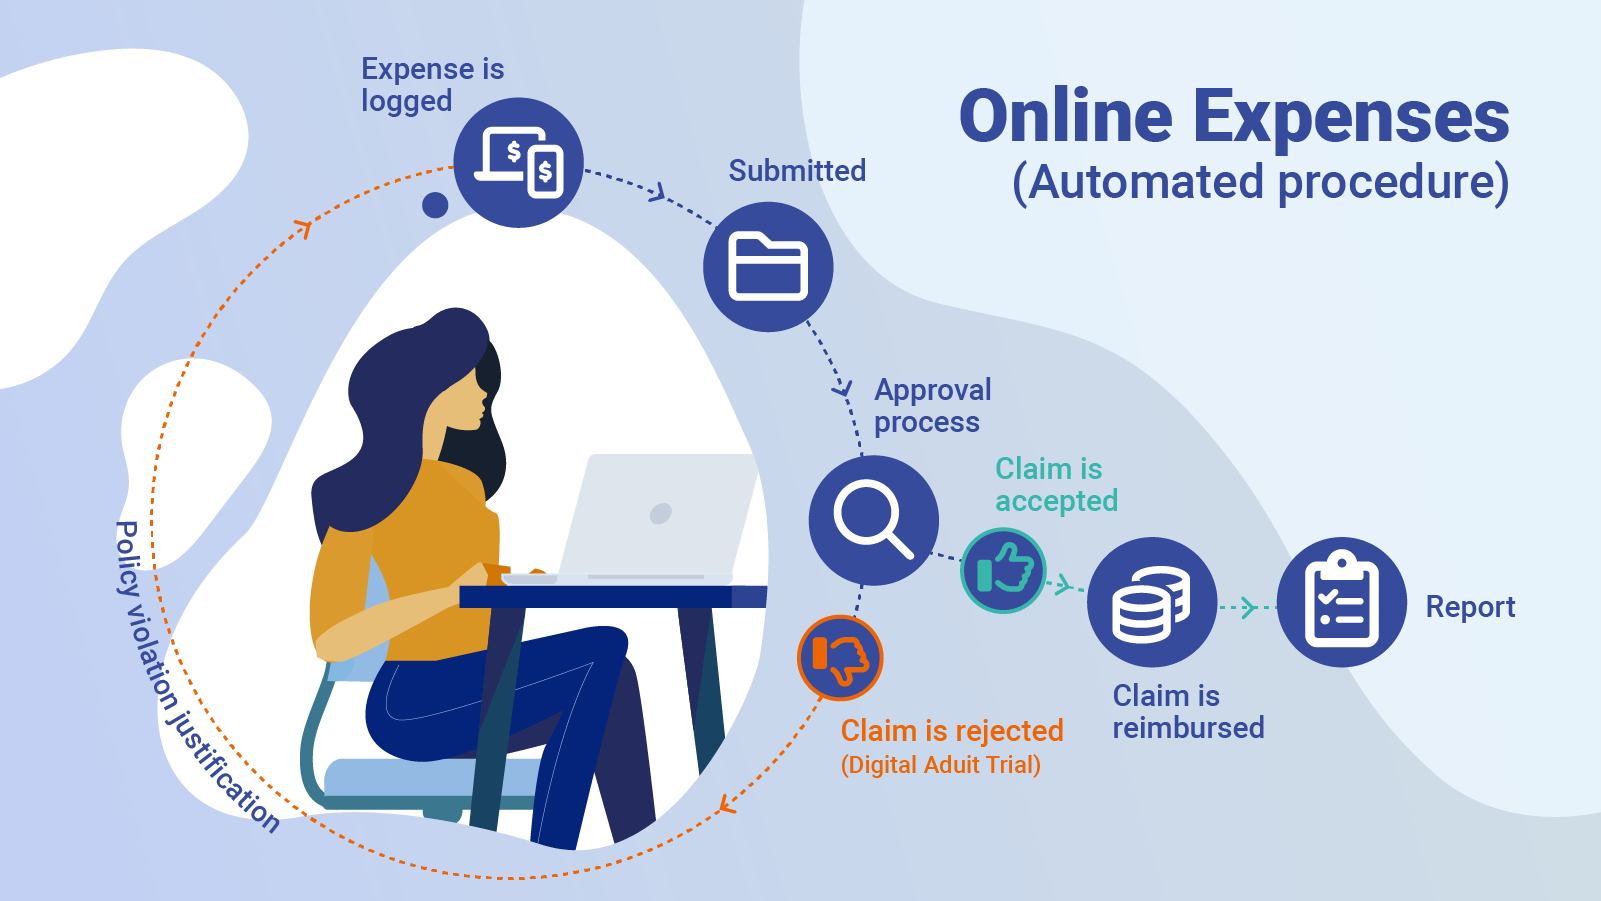 Online Expenses procedure graphic